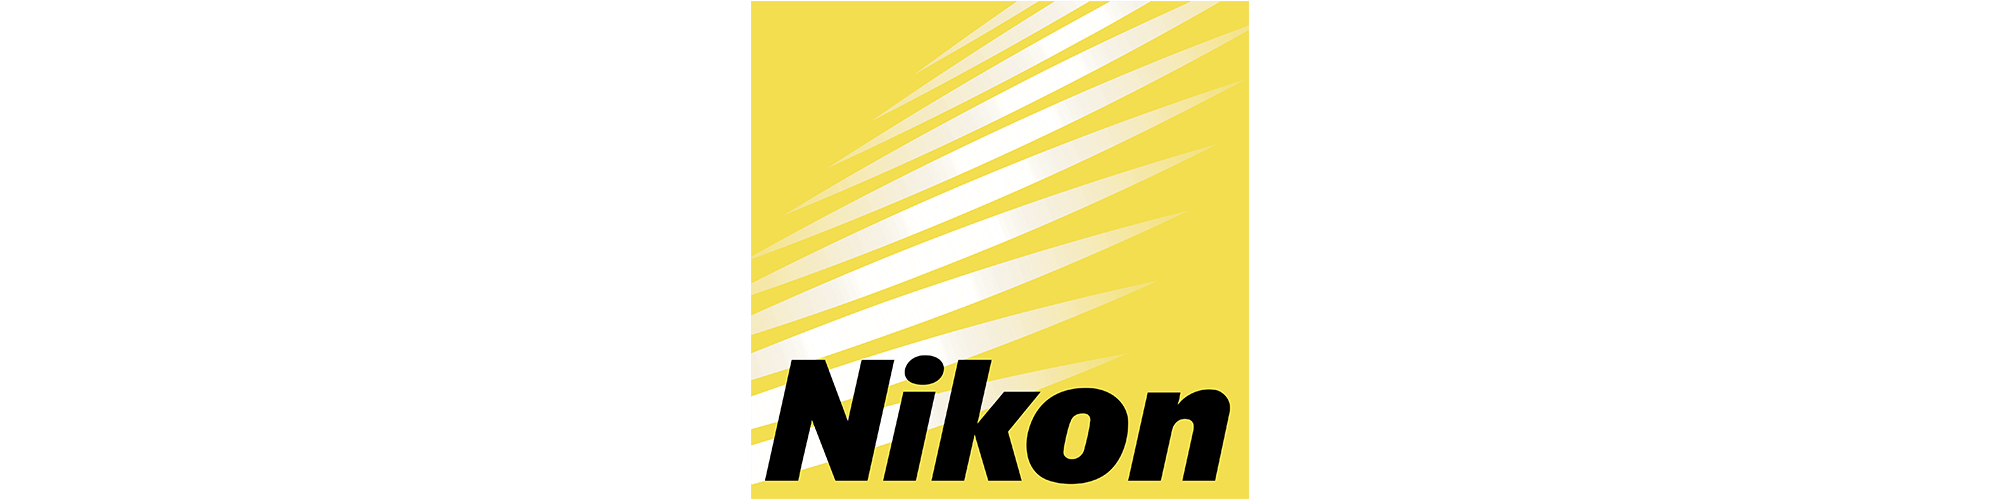 Nikon's logo uses yellow color psychology